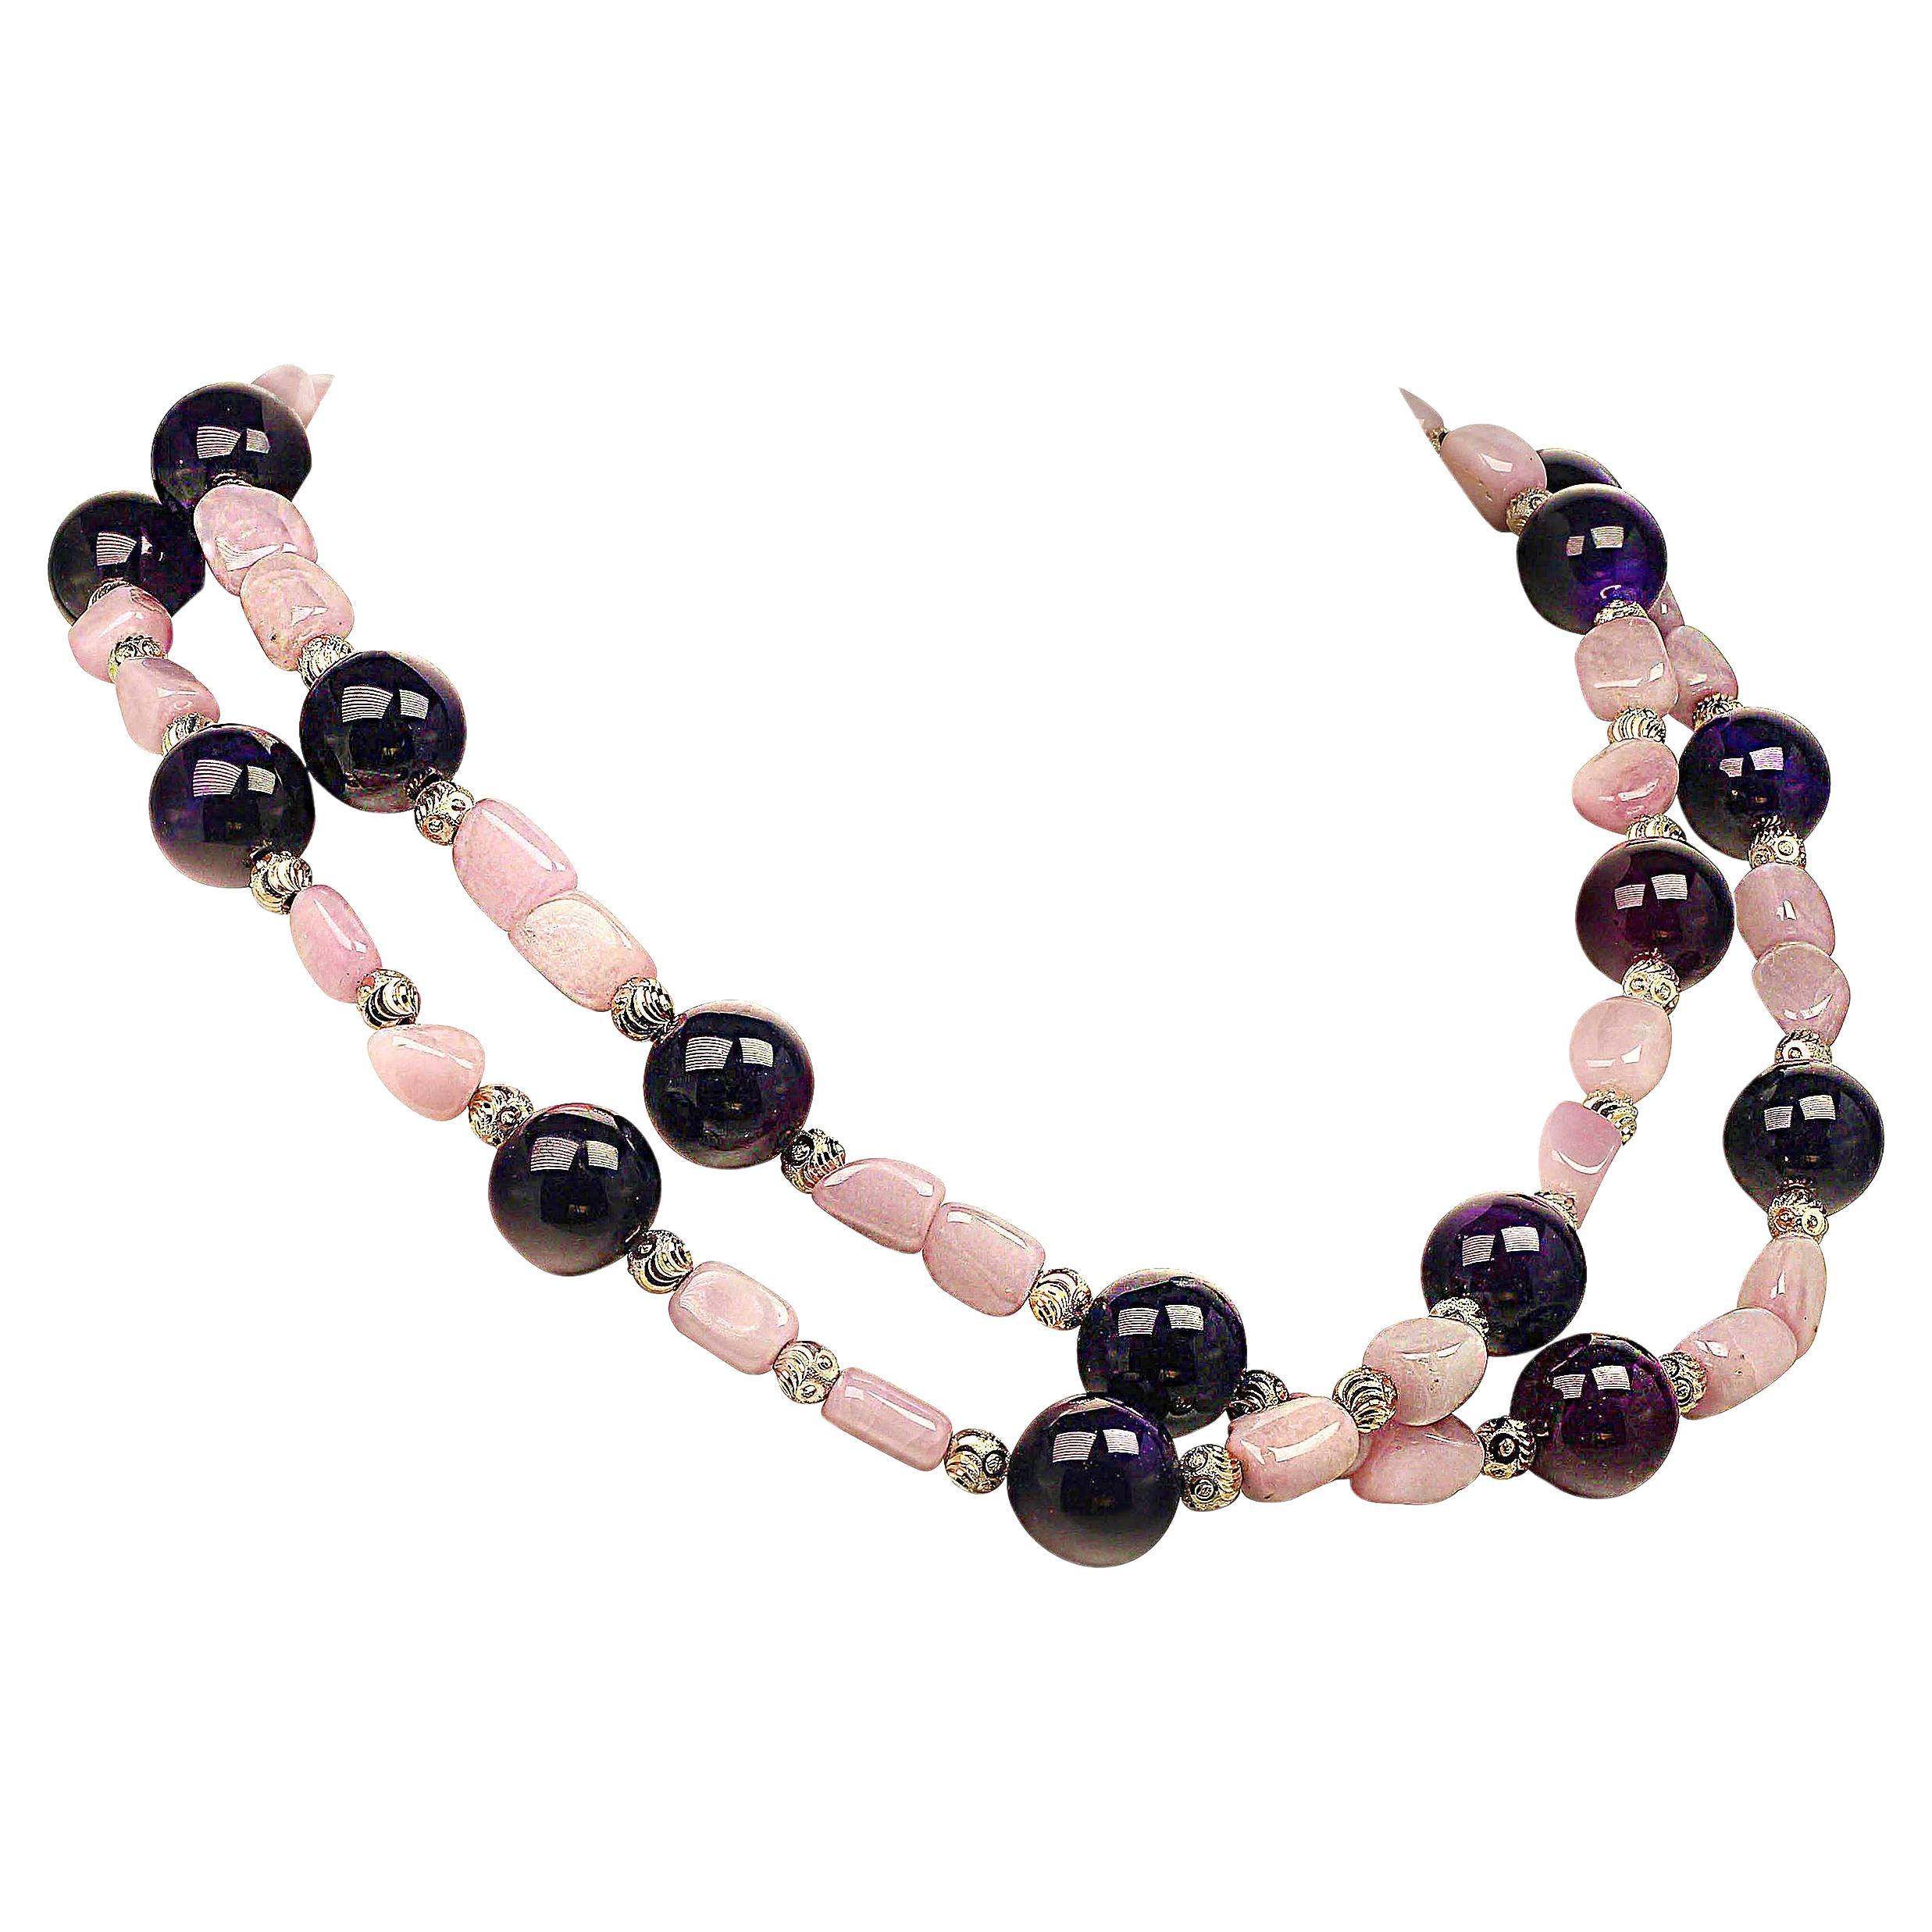 february birthstone strand necklaces